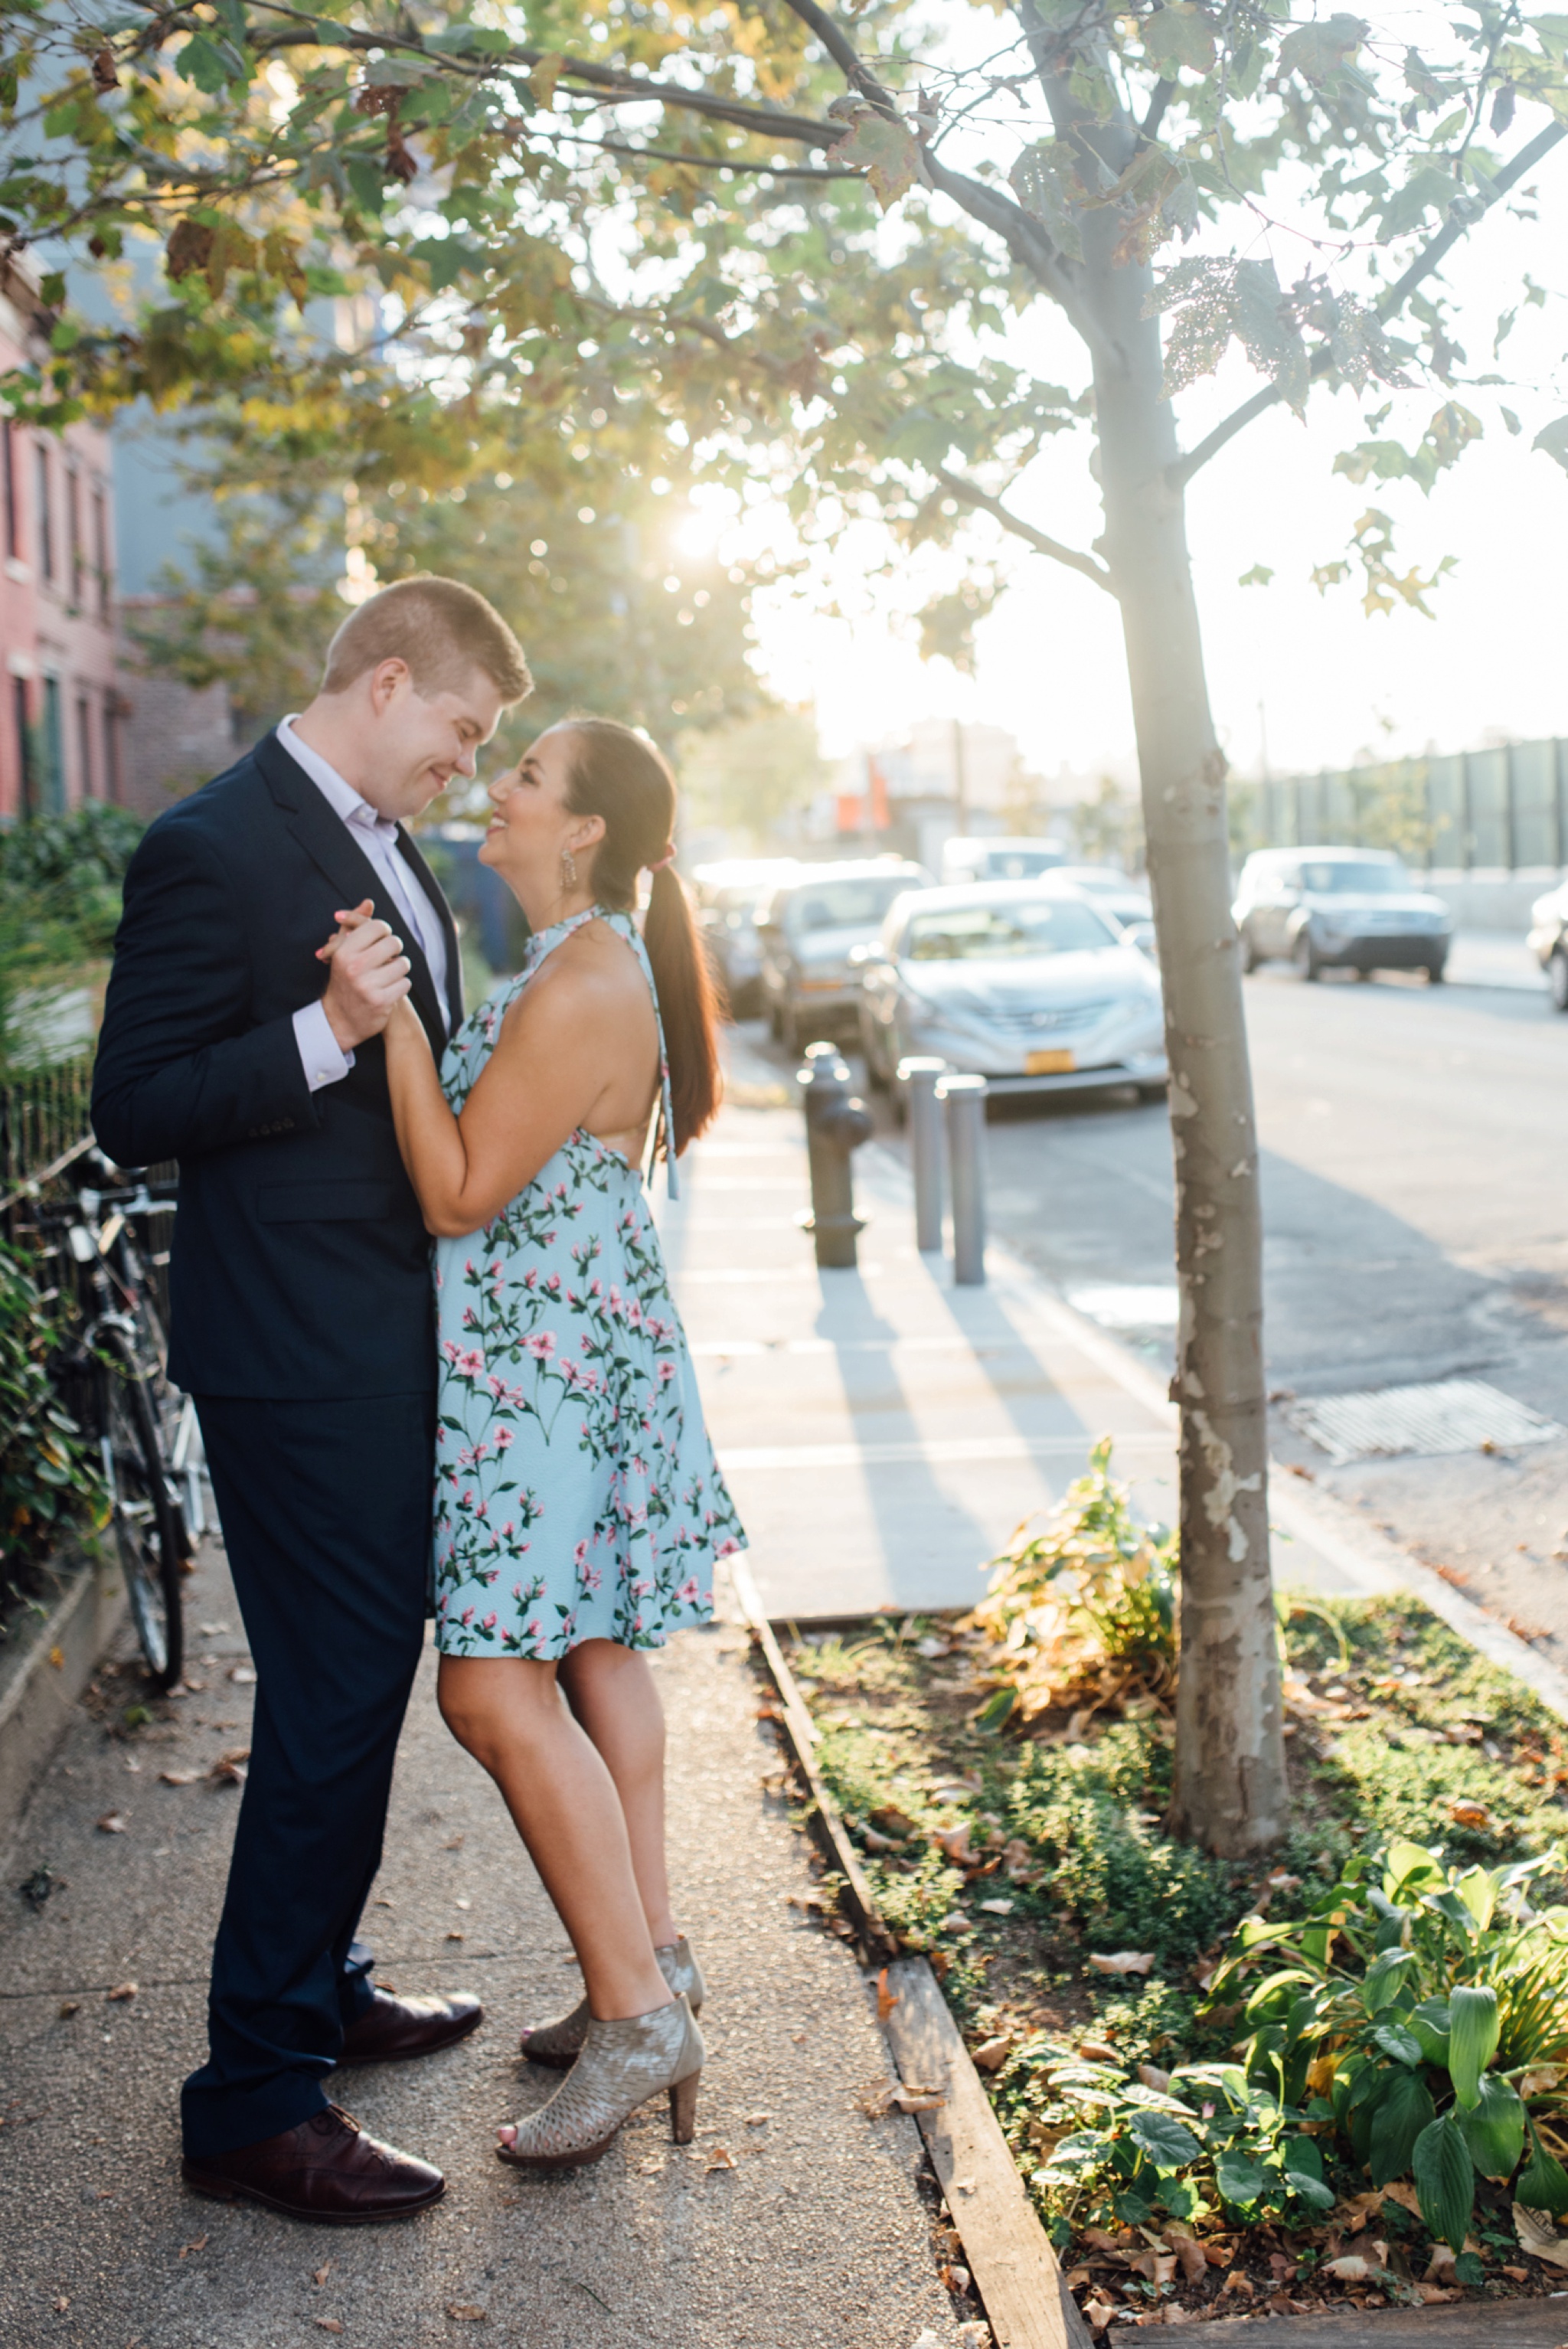 Colleen + Matt - Greenpoint Brooklyn New York Engagement Session - Alison Dunn Photography photo